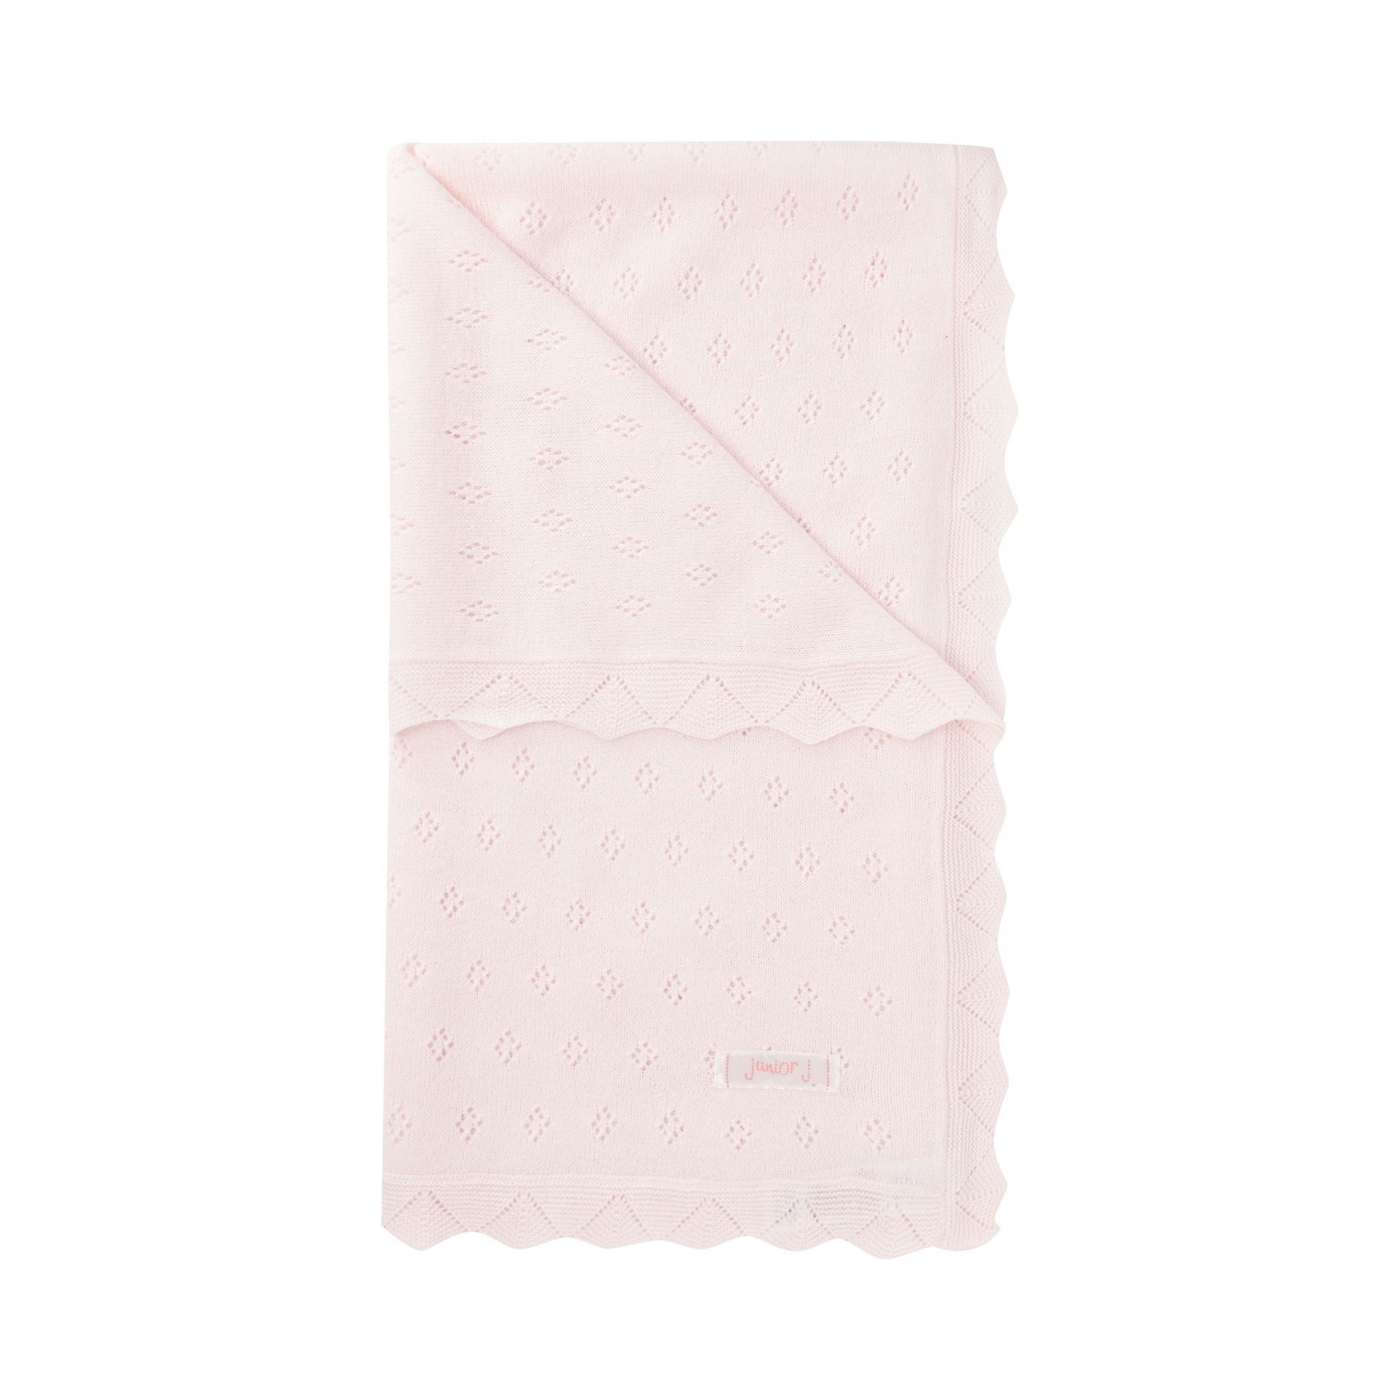 J by Jasper Conran Designer Babies pale pink knitted blanket